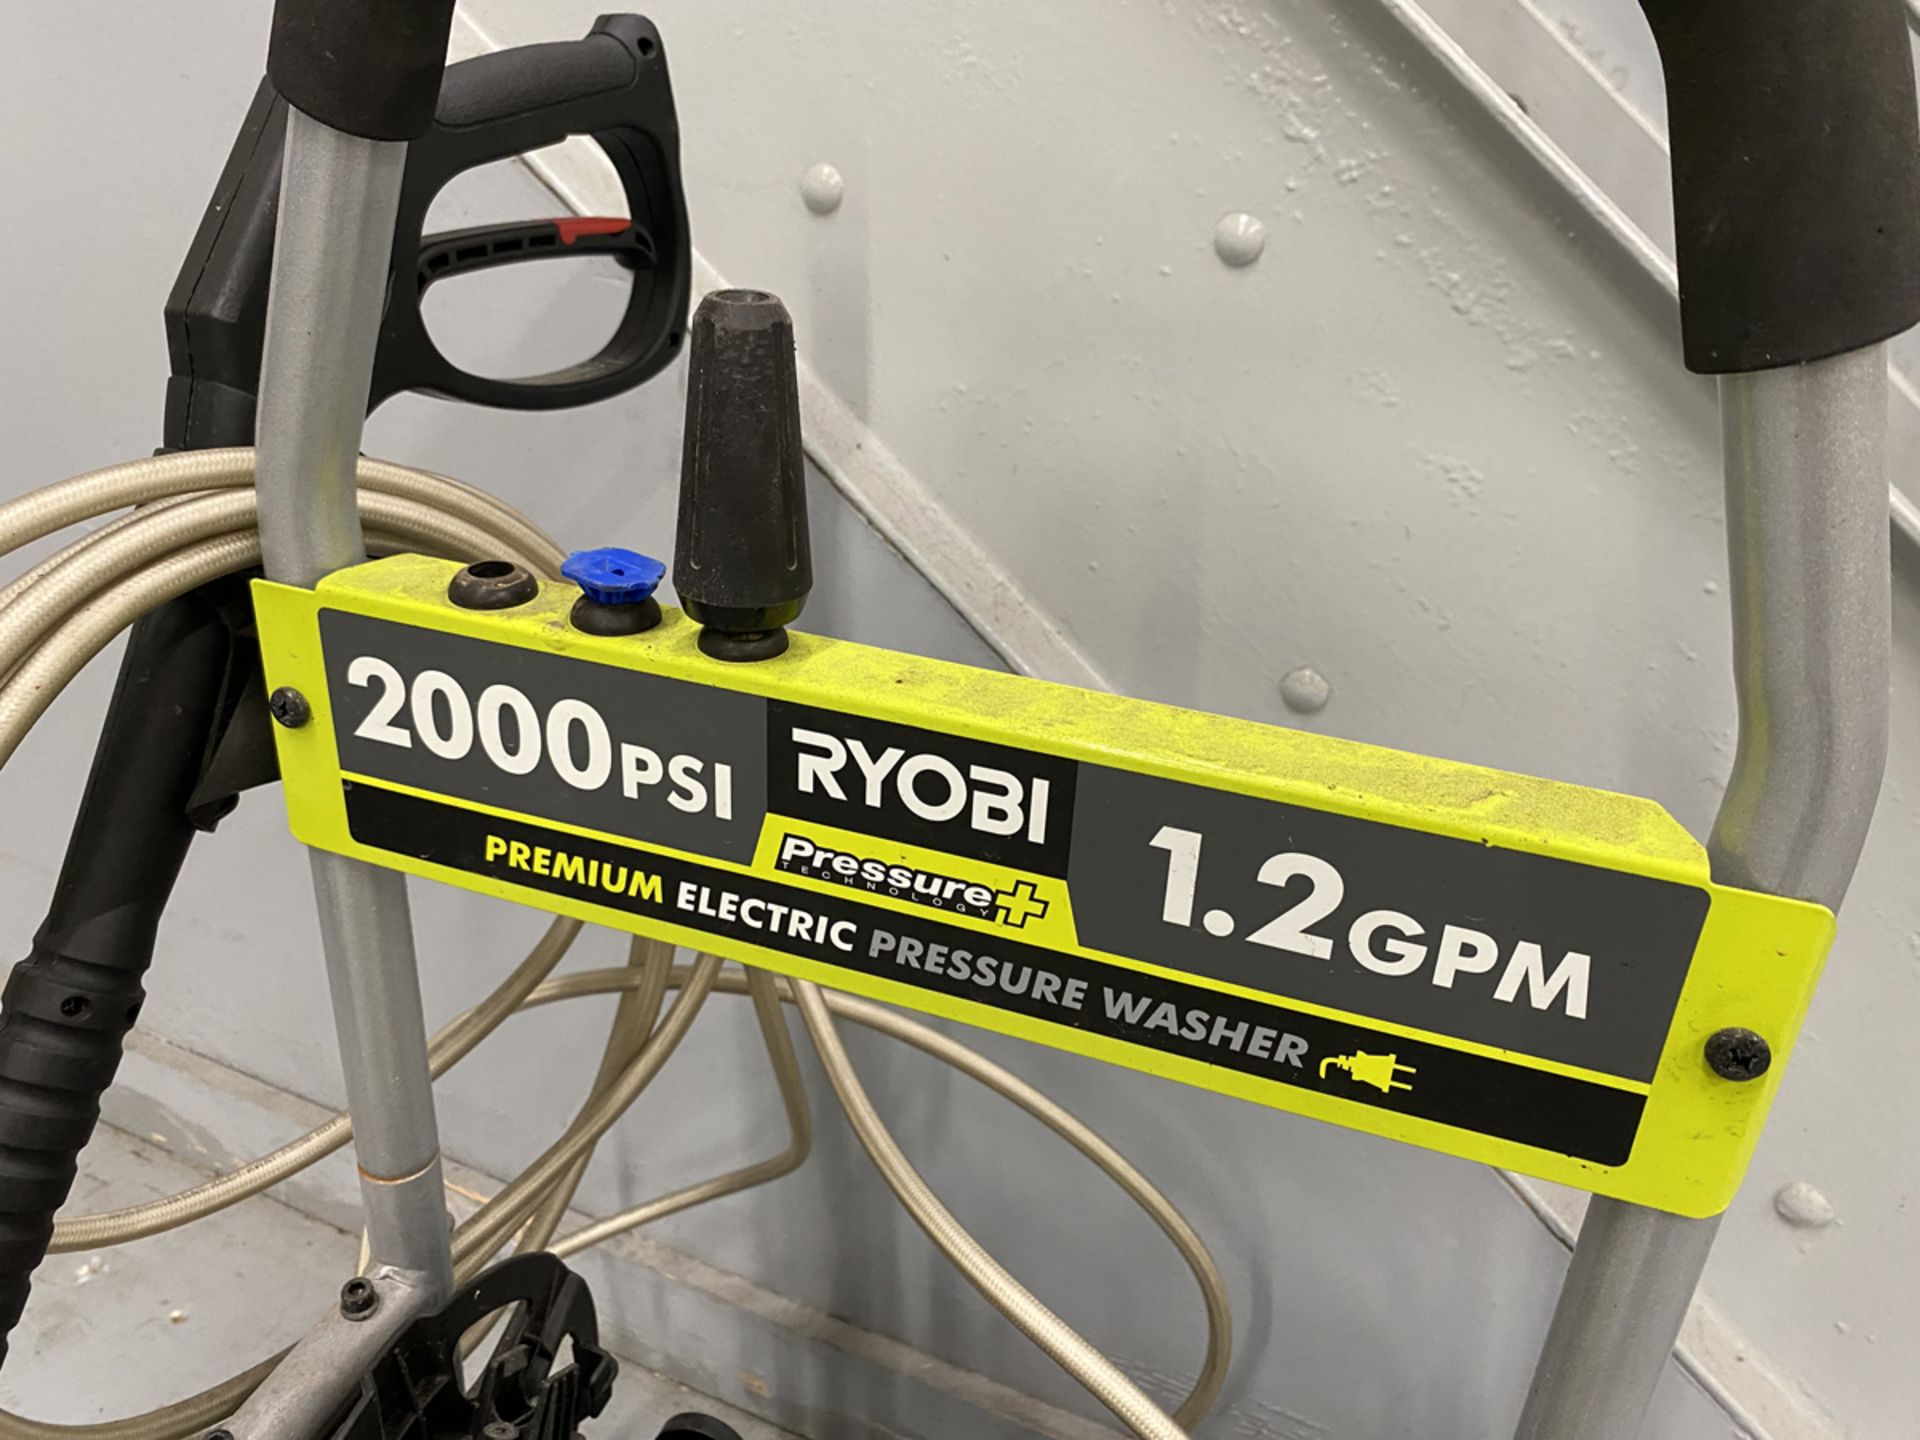 Ryobi 2000 PSI Electric Pressure Washer - Image 3 of 5